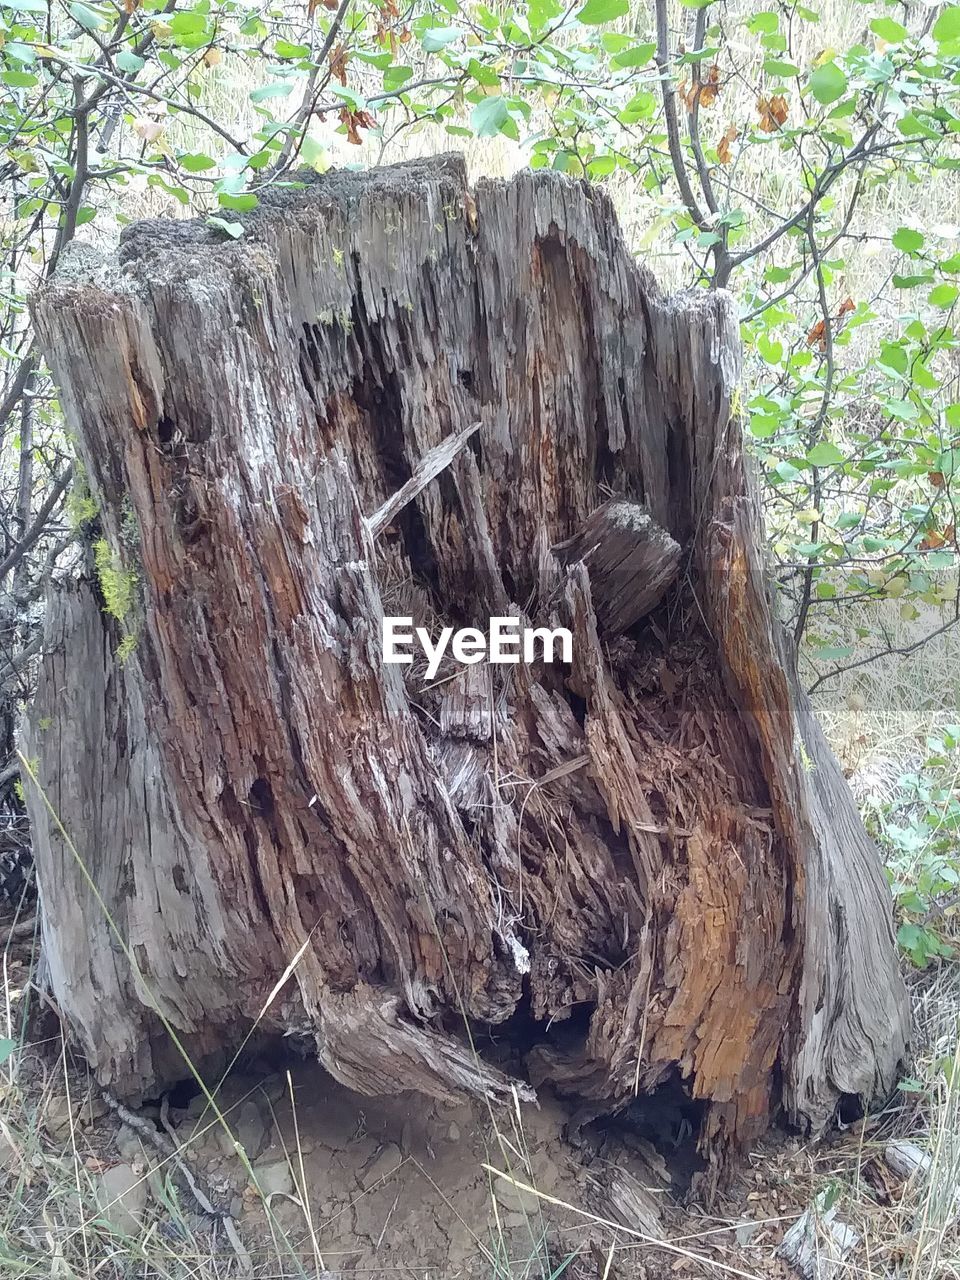 VIEW OF TREE STUMP